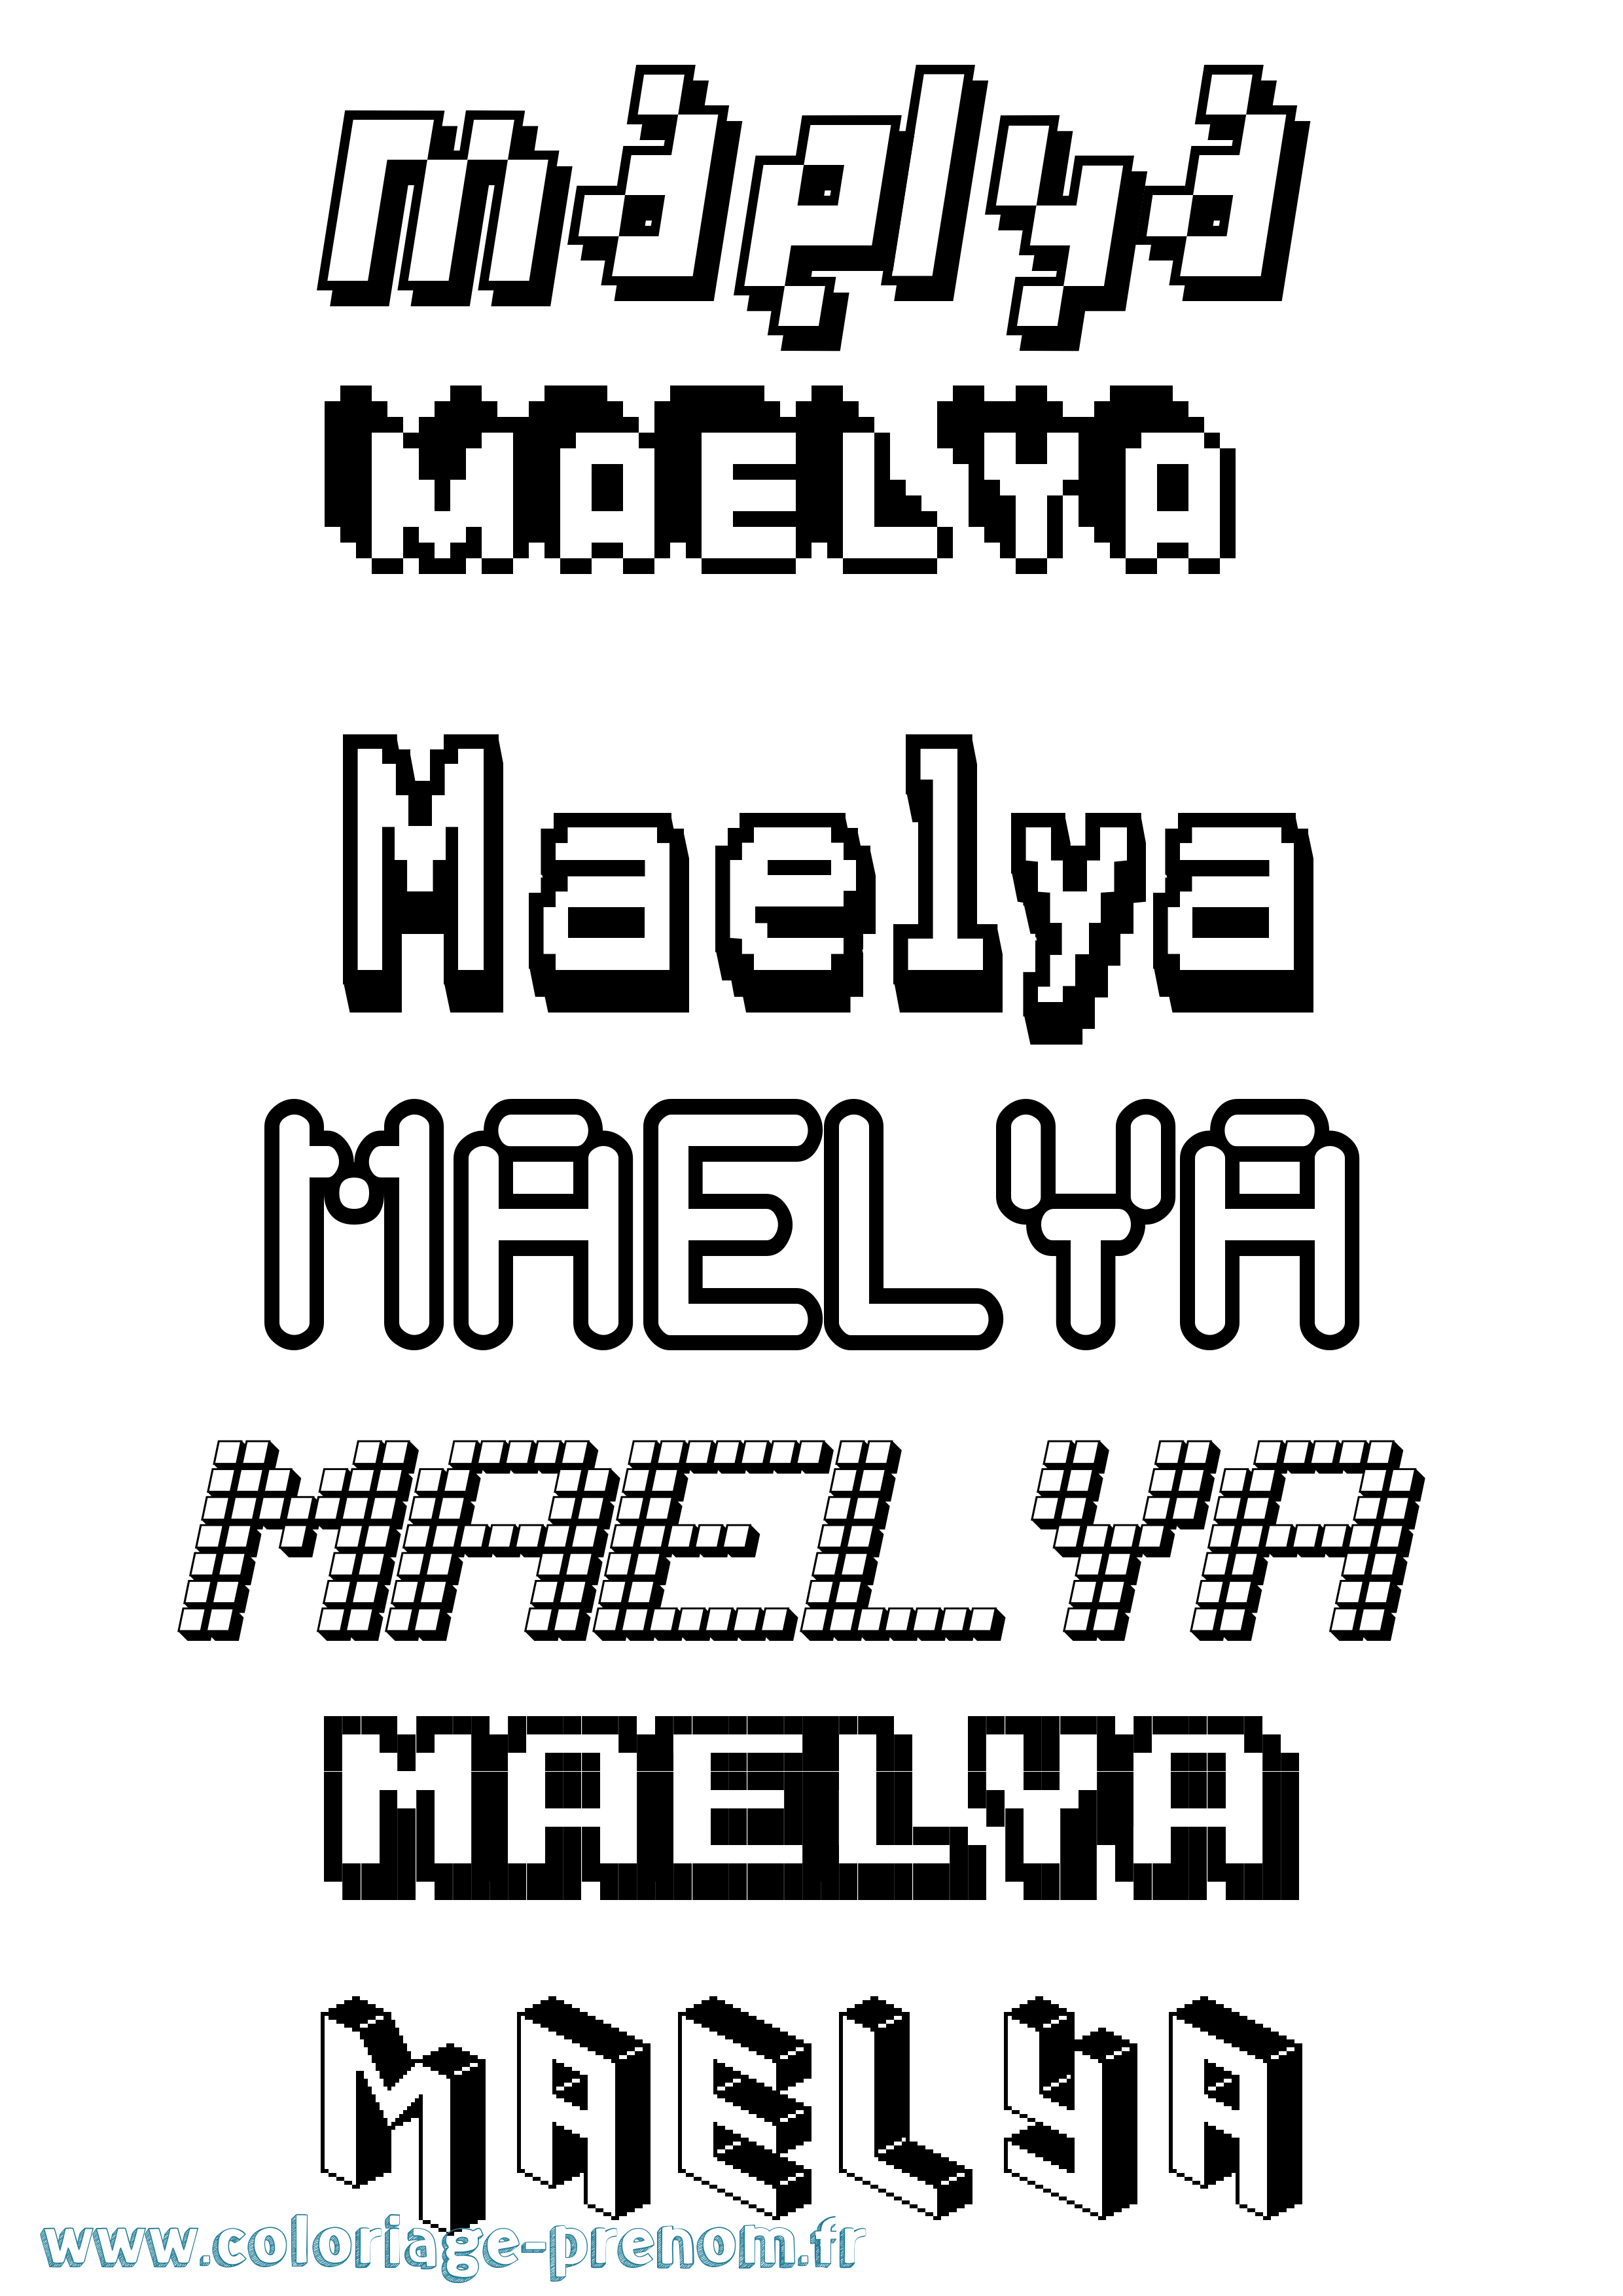 Coloriage prénom Maelya Pixel